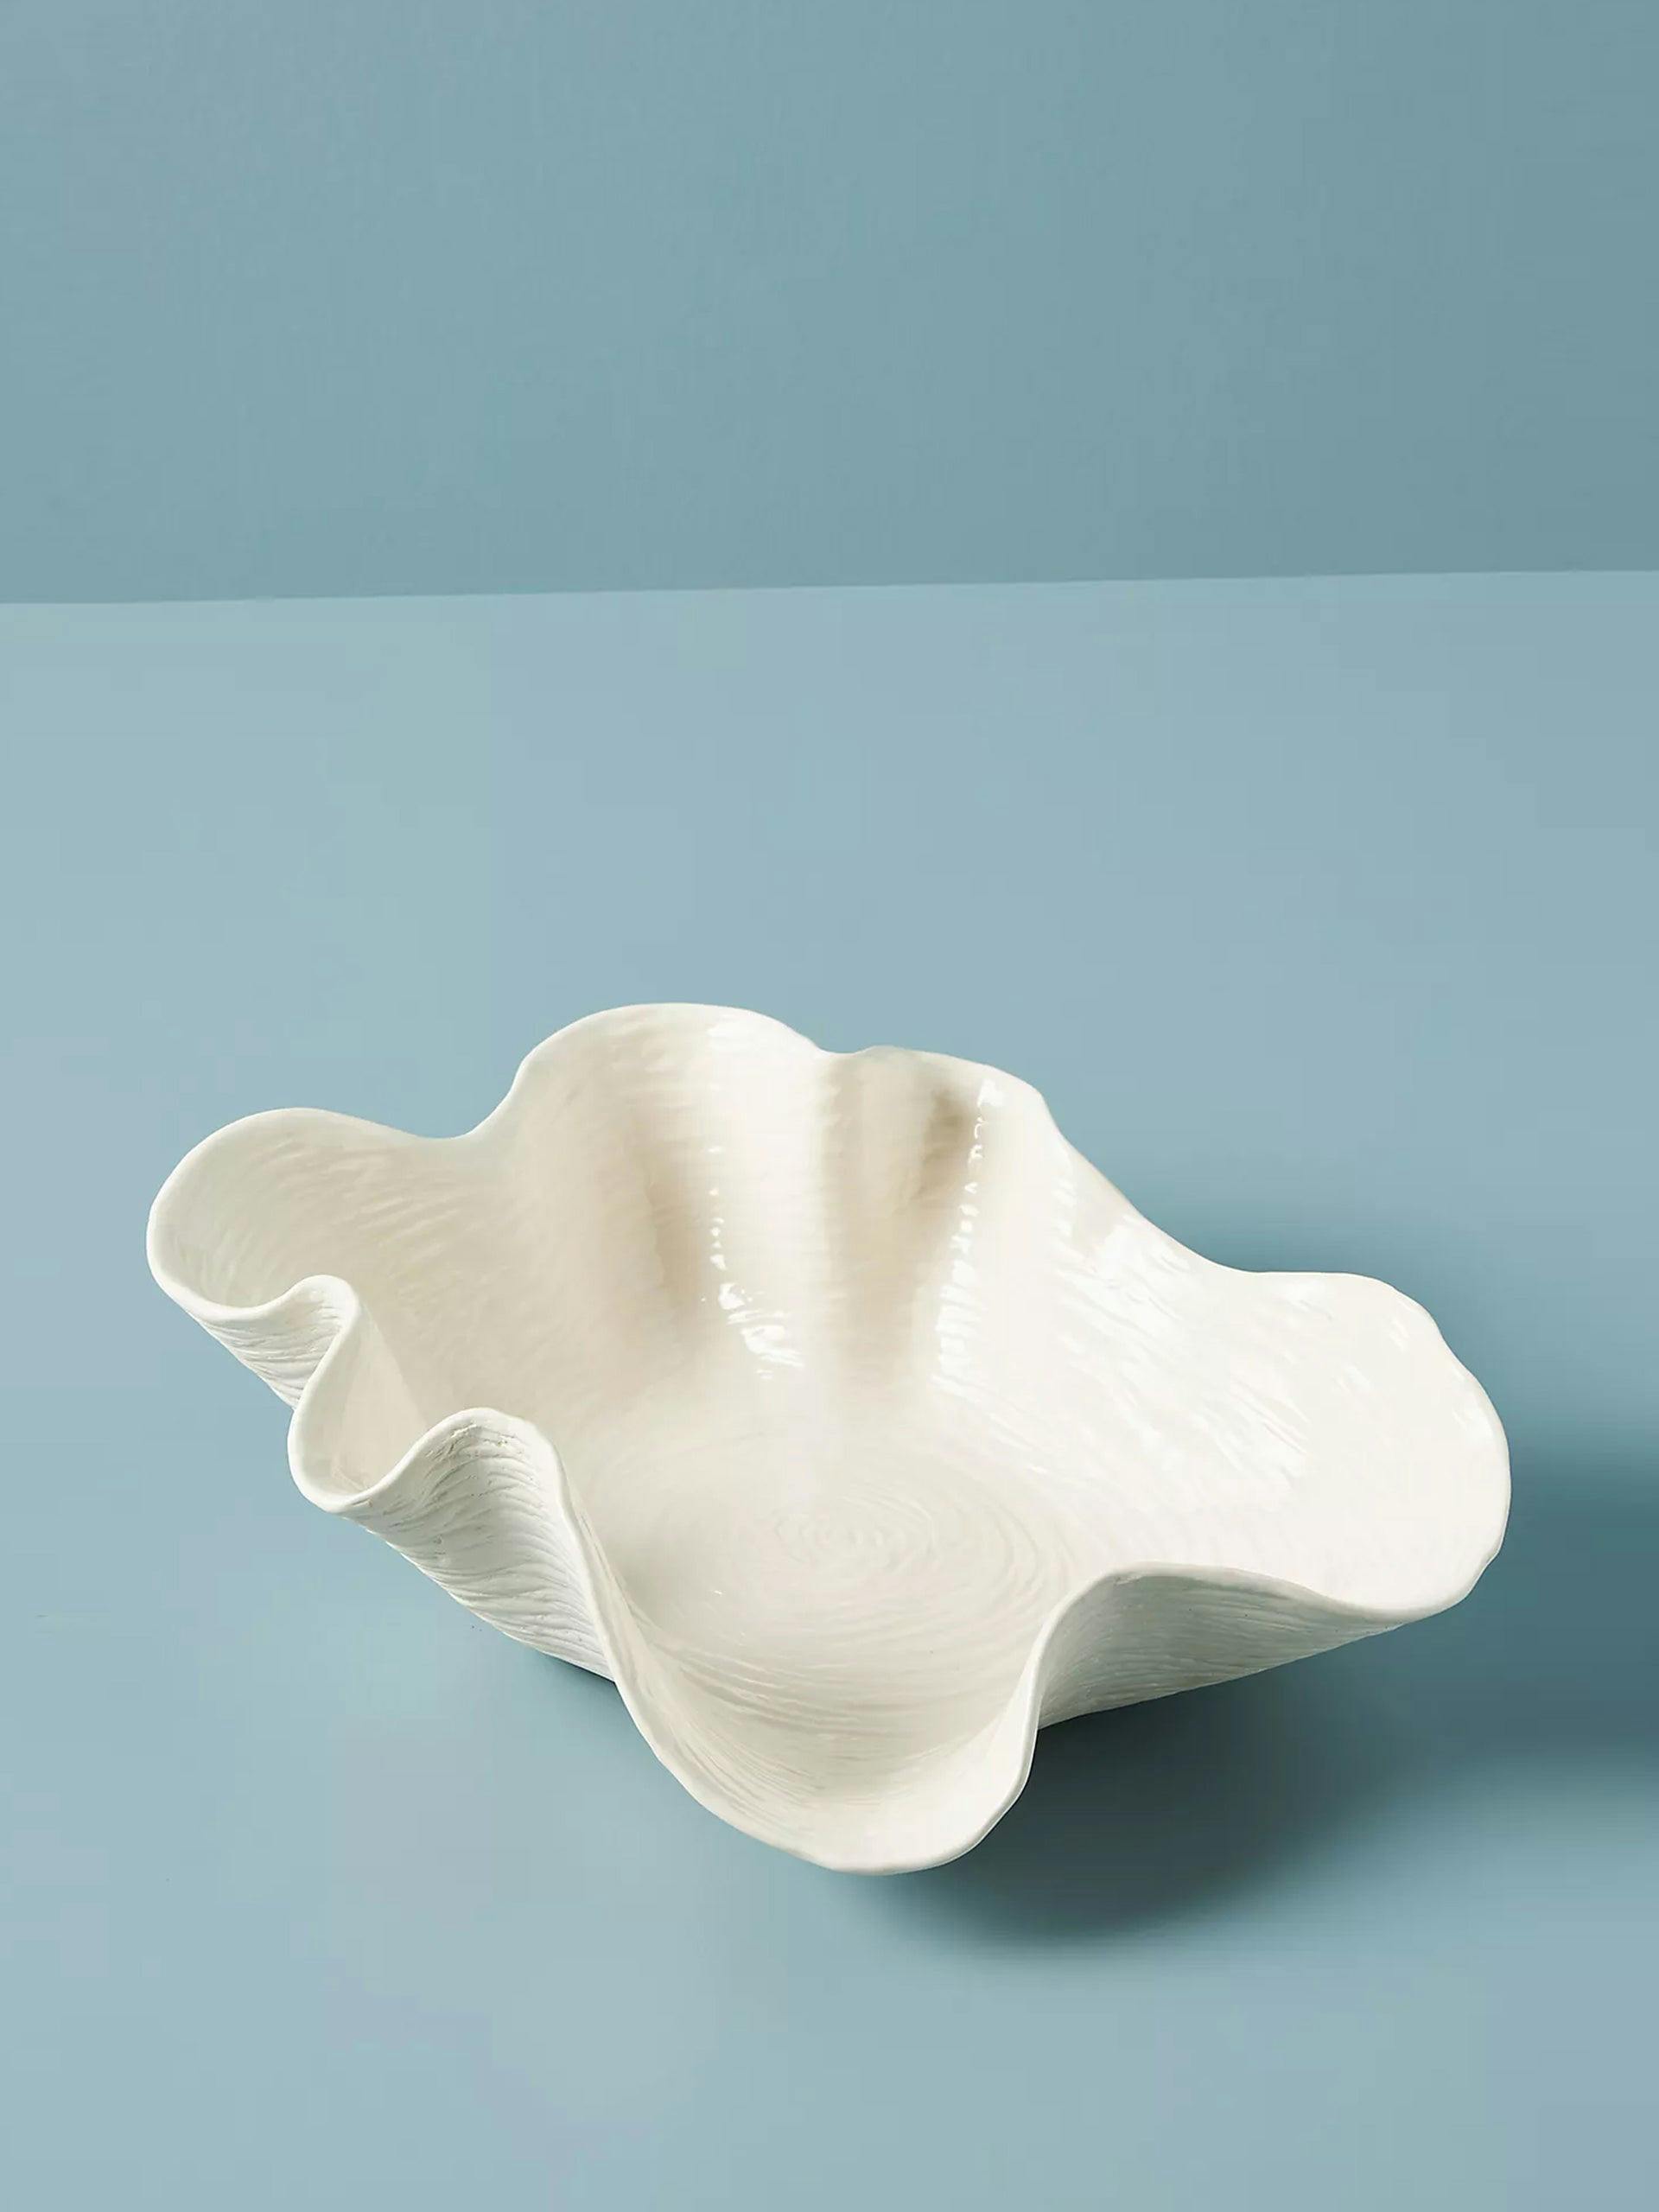 Textured stoneware bowl